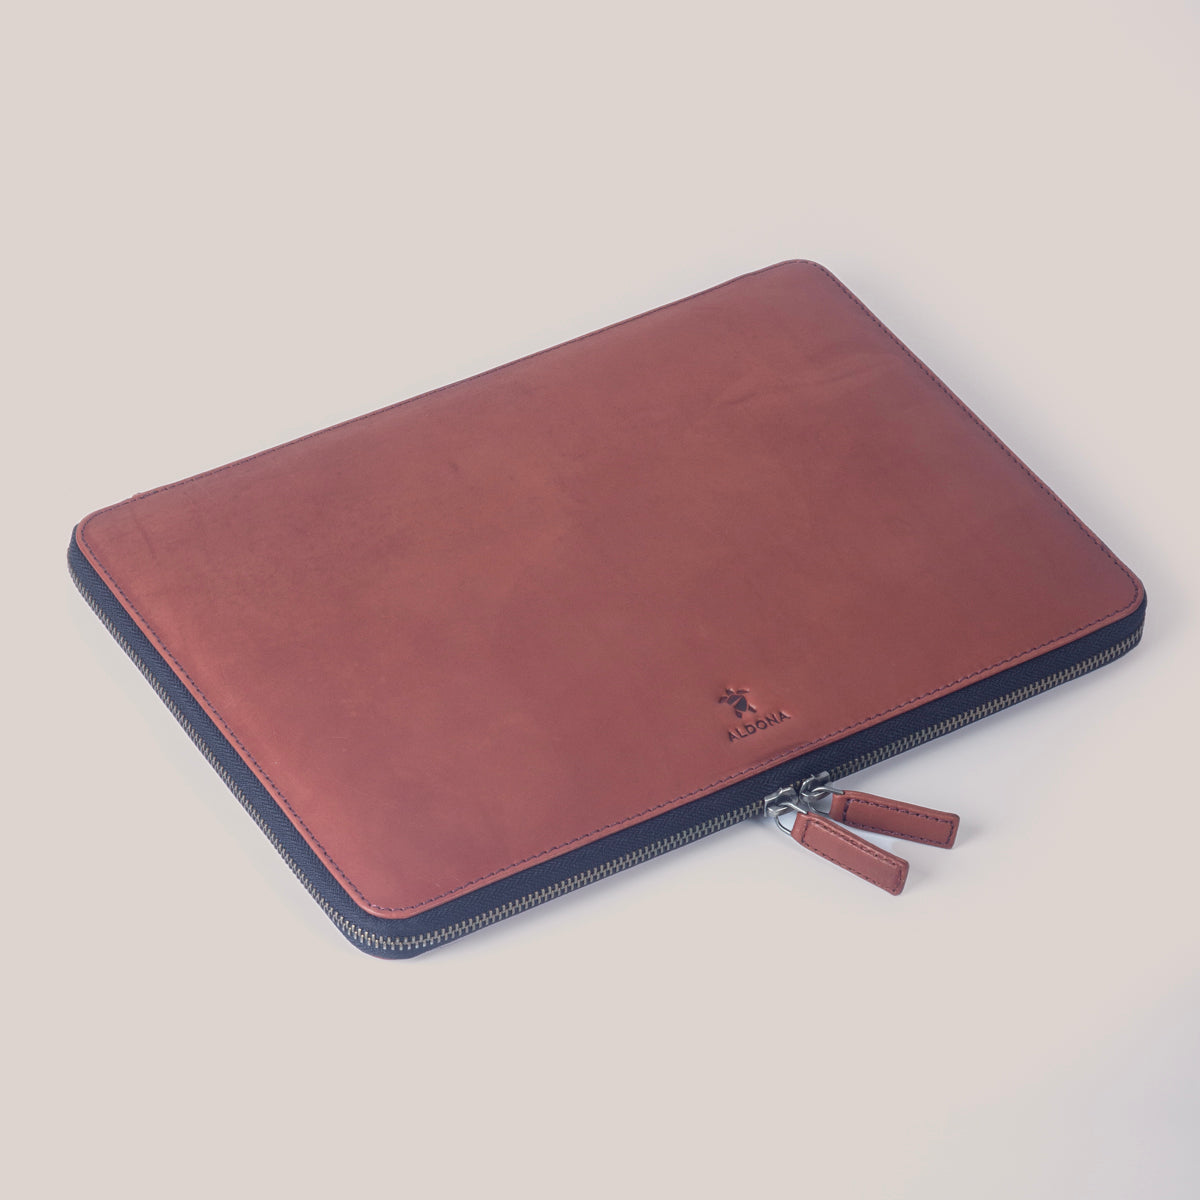 Microsoft Surface Laptop Studio Zippered Laptop Case - Cognac